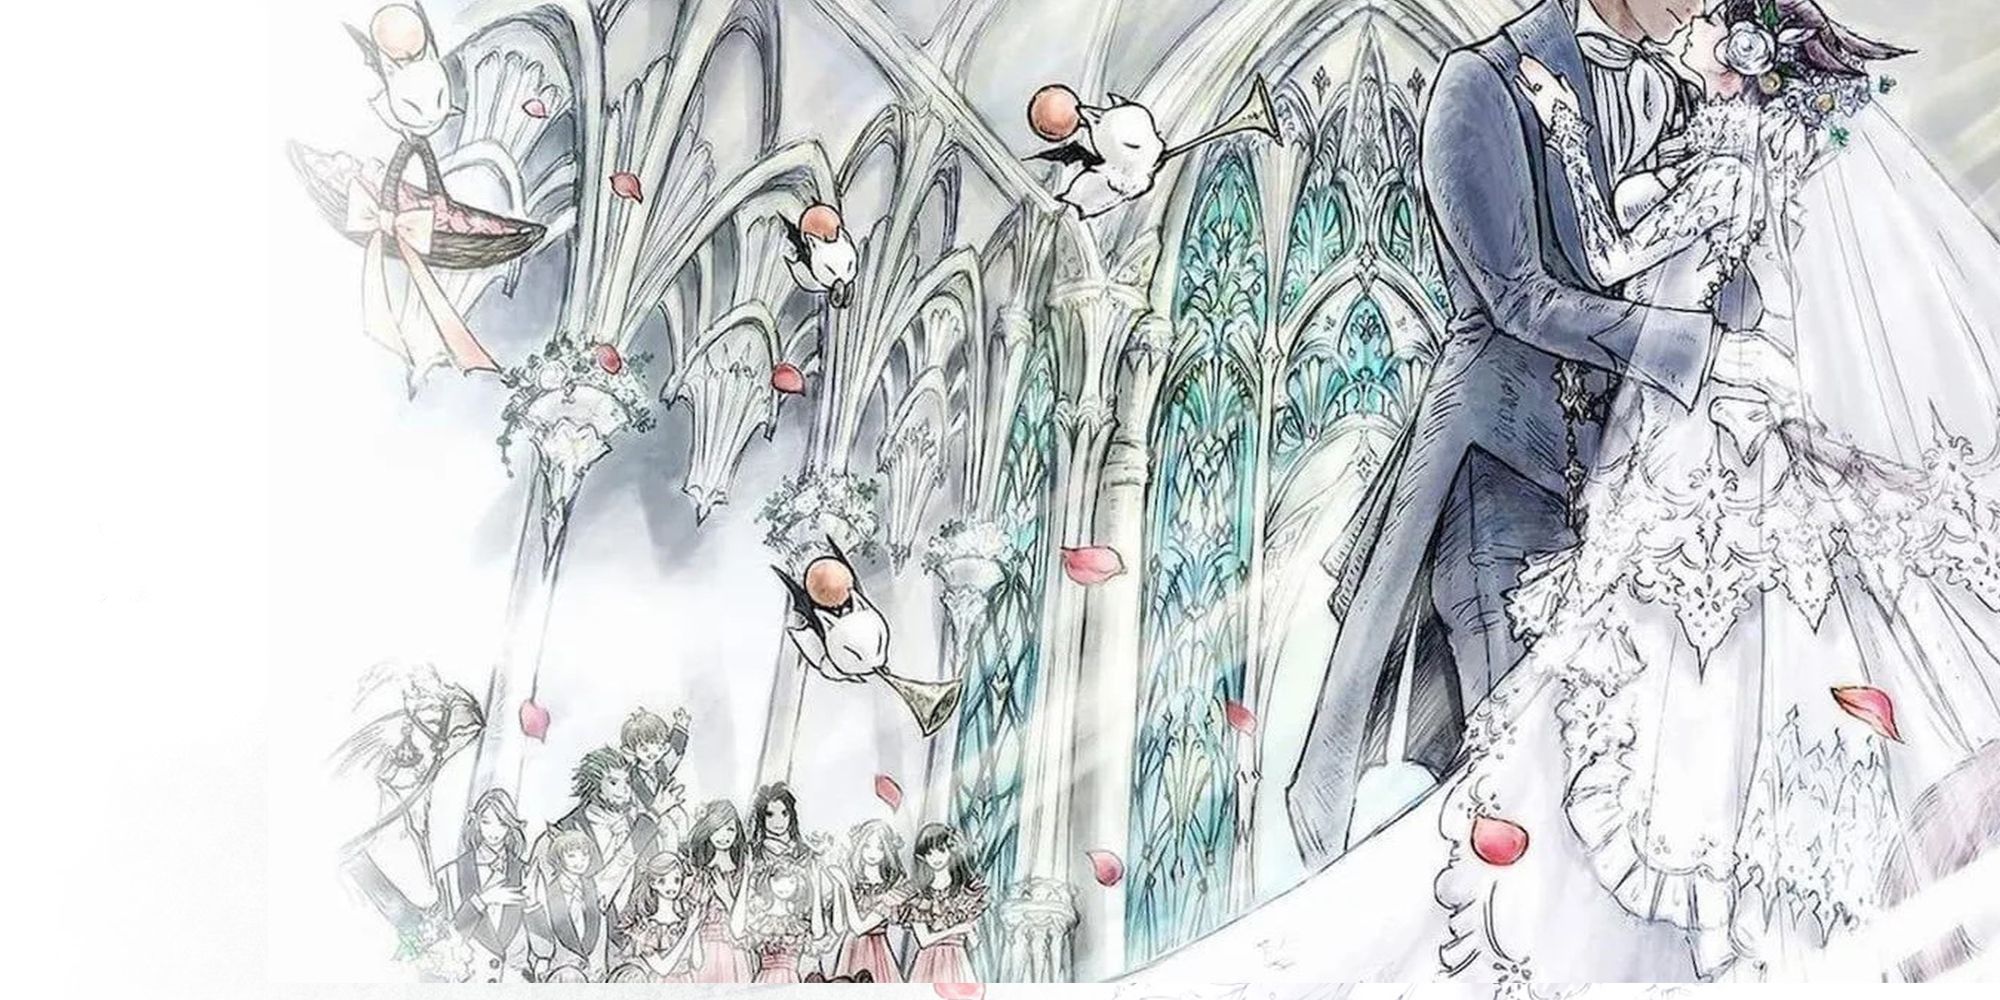 Final Fantasy XIV Official Square Enix art of ceremony of eternal bonding